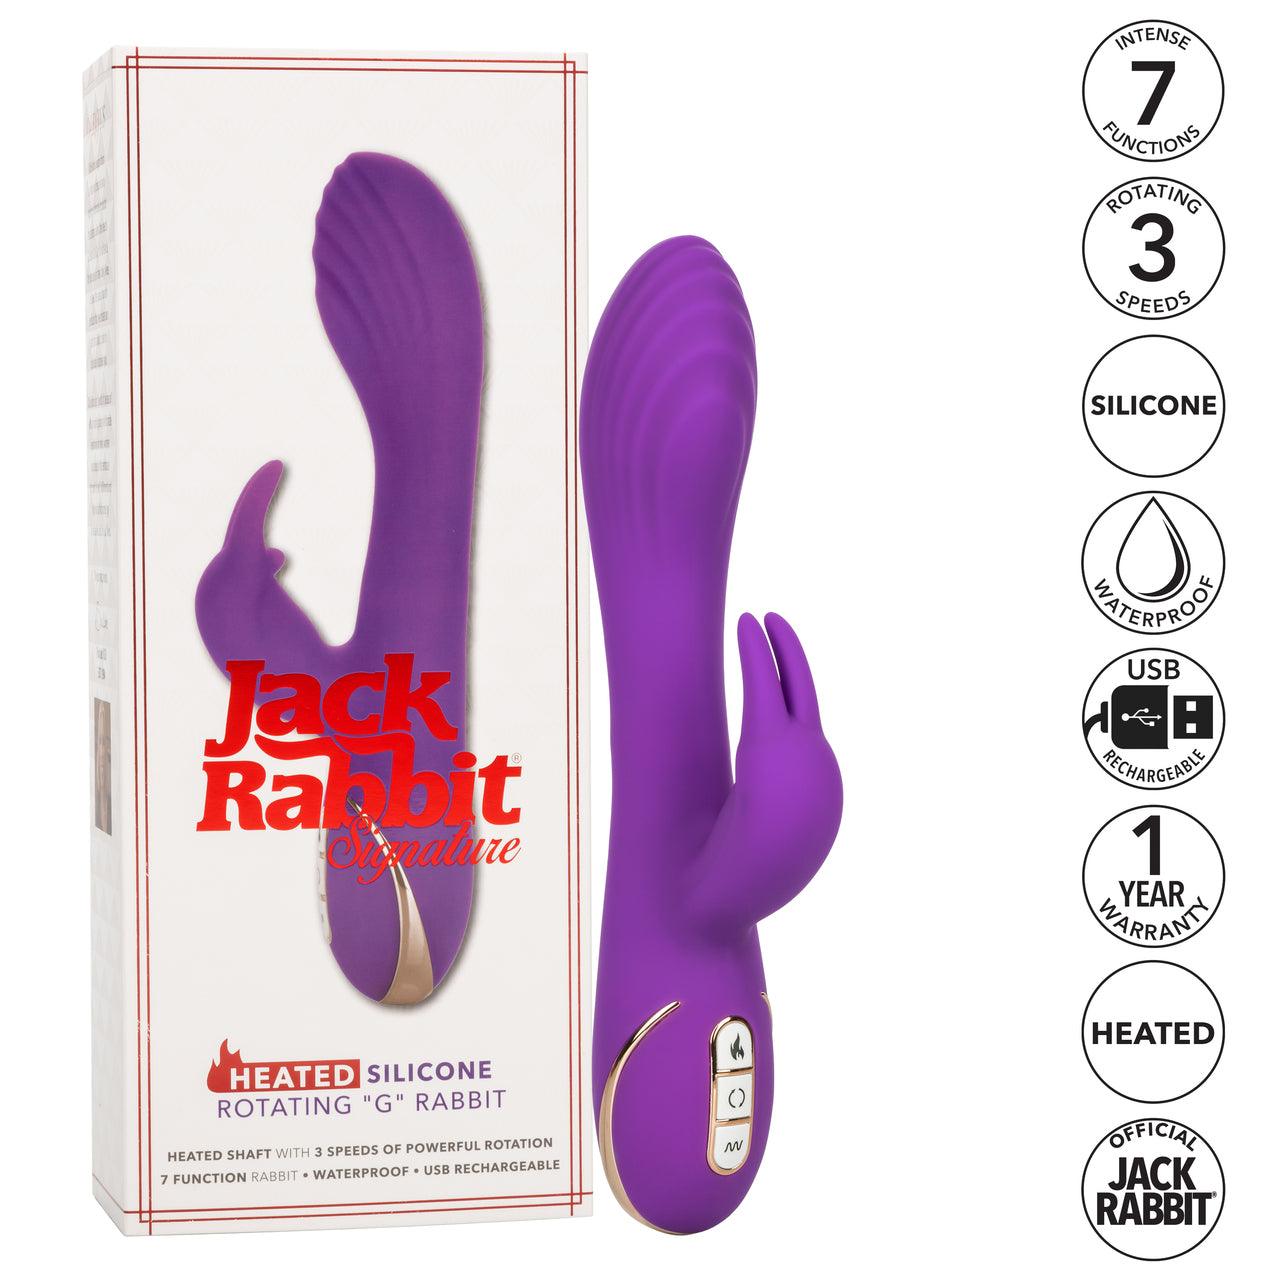 Jack Rabbit Signature Heated Silicone Rotating G Rabbit - Buy At Luxury Toy X - Free 3-Day Shipping